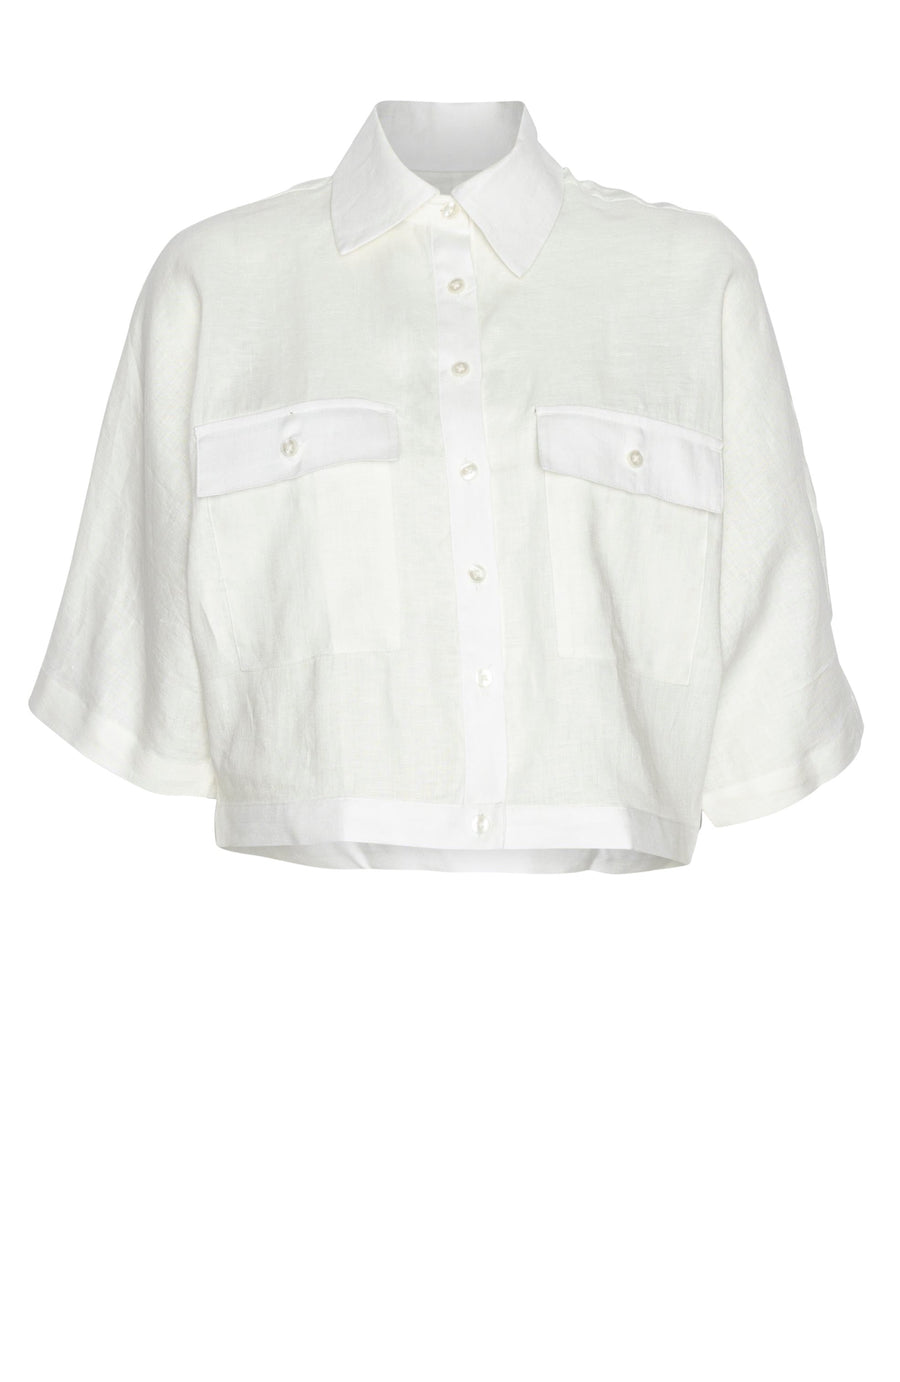 Kimono Sleeve Shirt White Linen